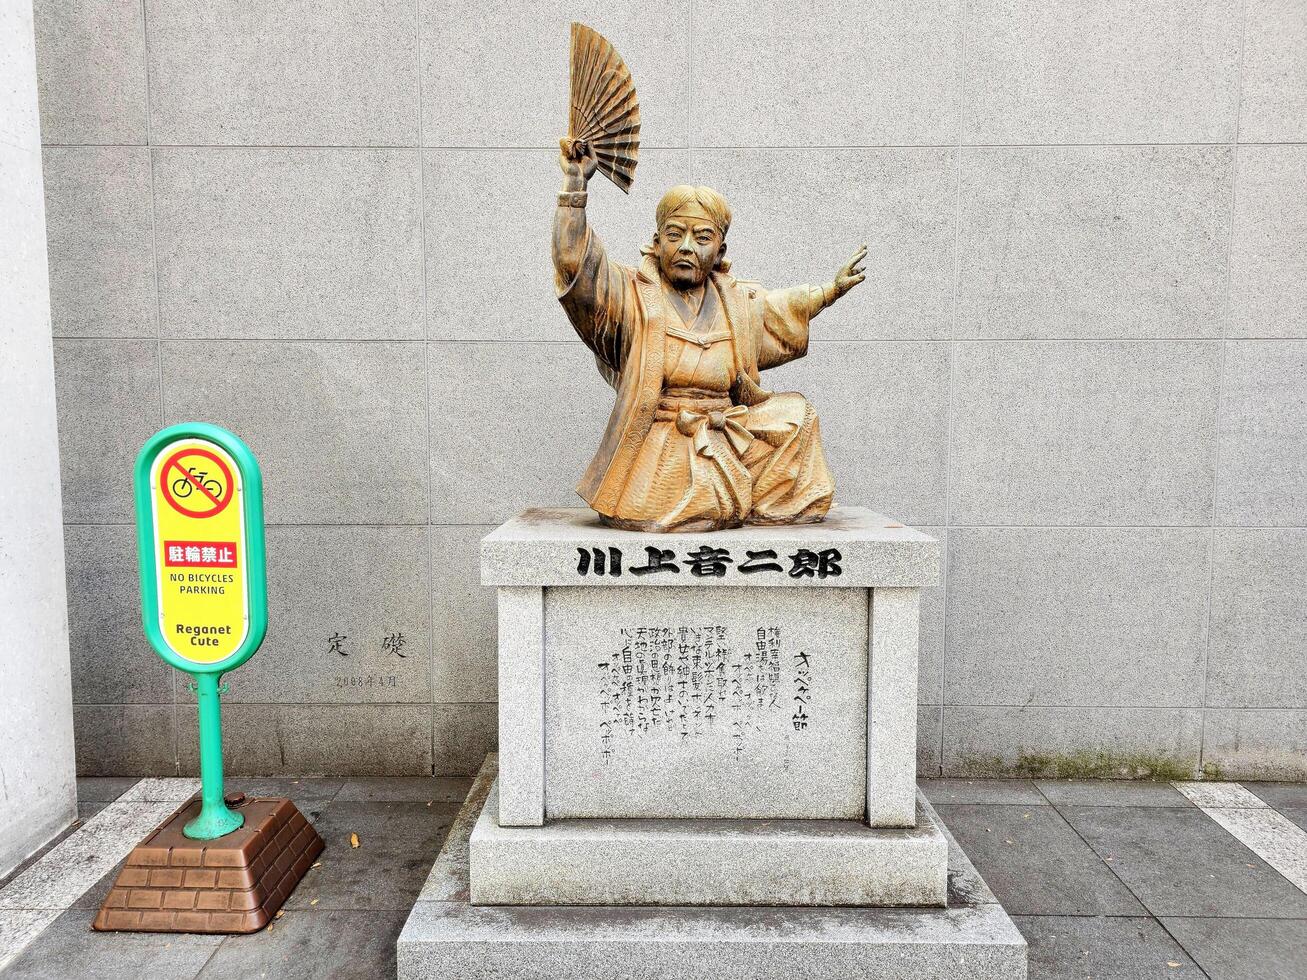 fukuoka, Japan november 13, 2023 standbeeld van otojiro kawakami wie was een beroemd Japans acteur en komiek. foto